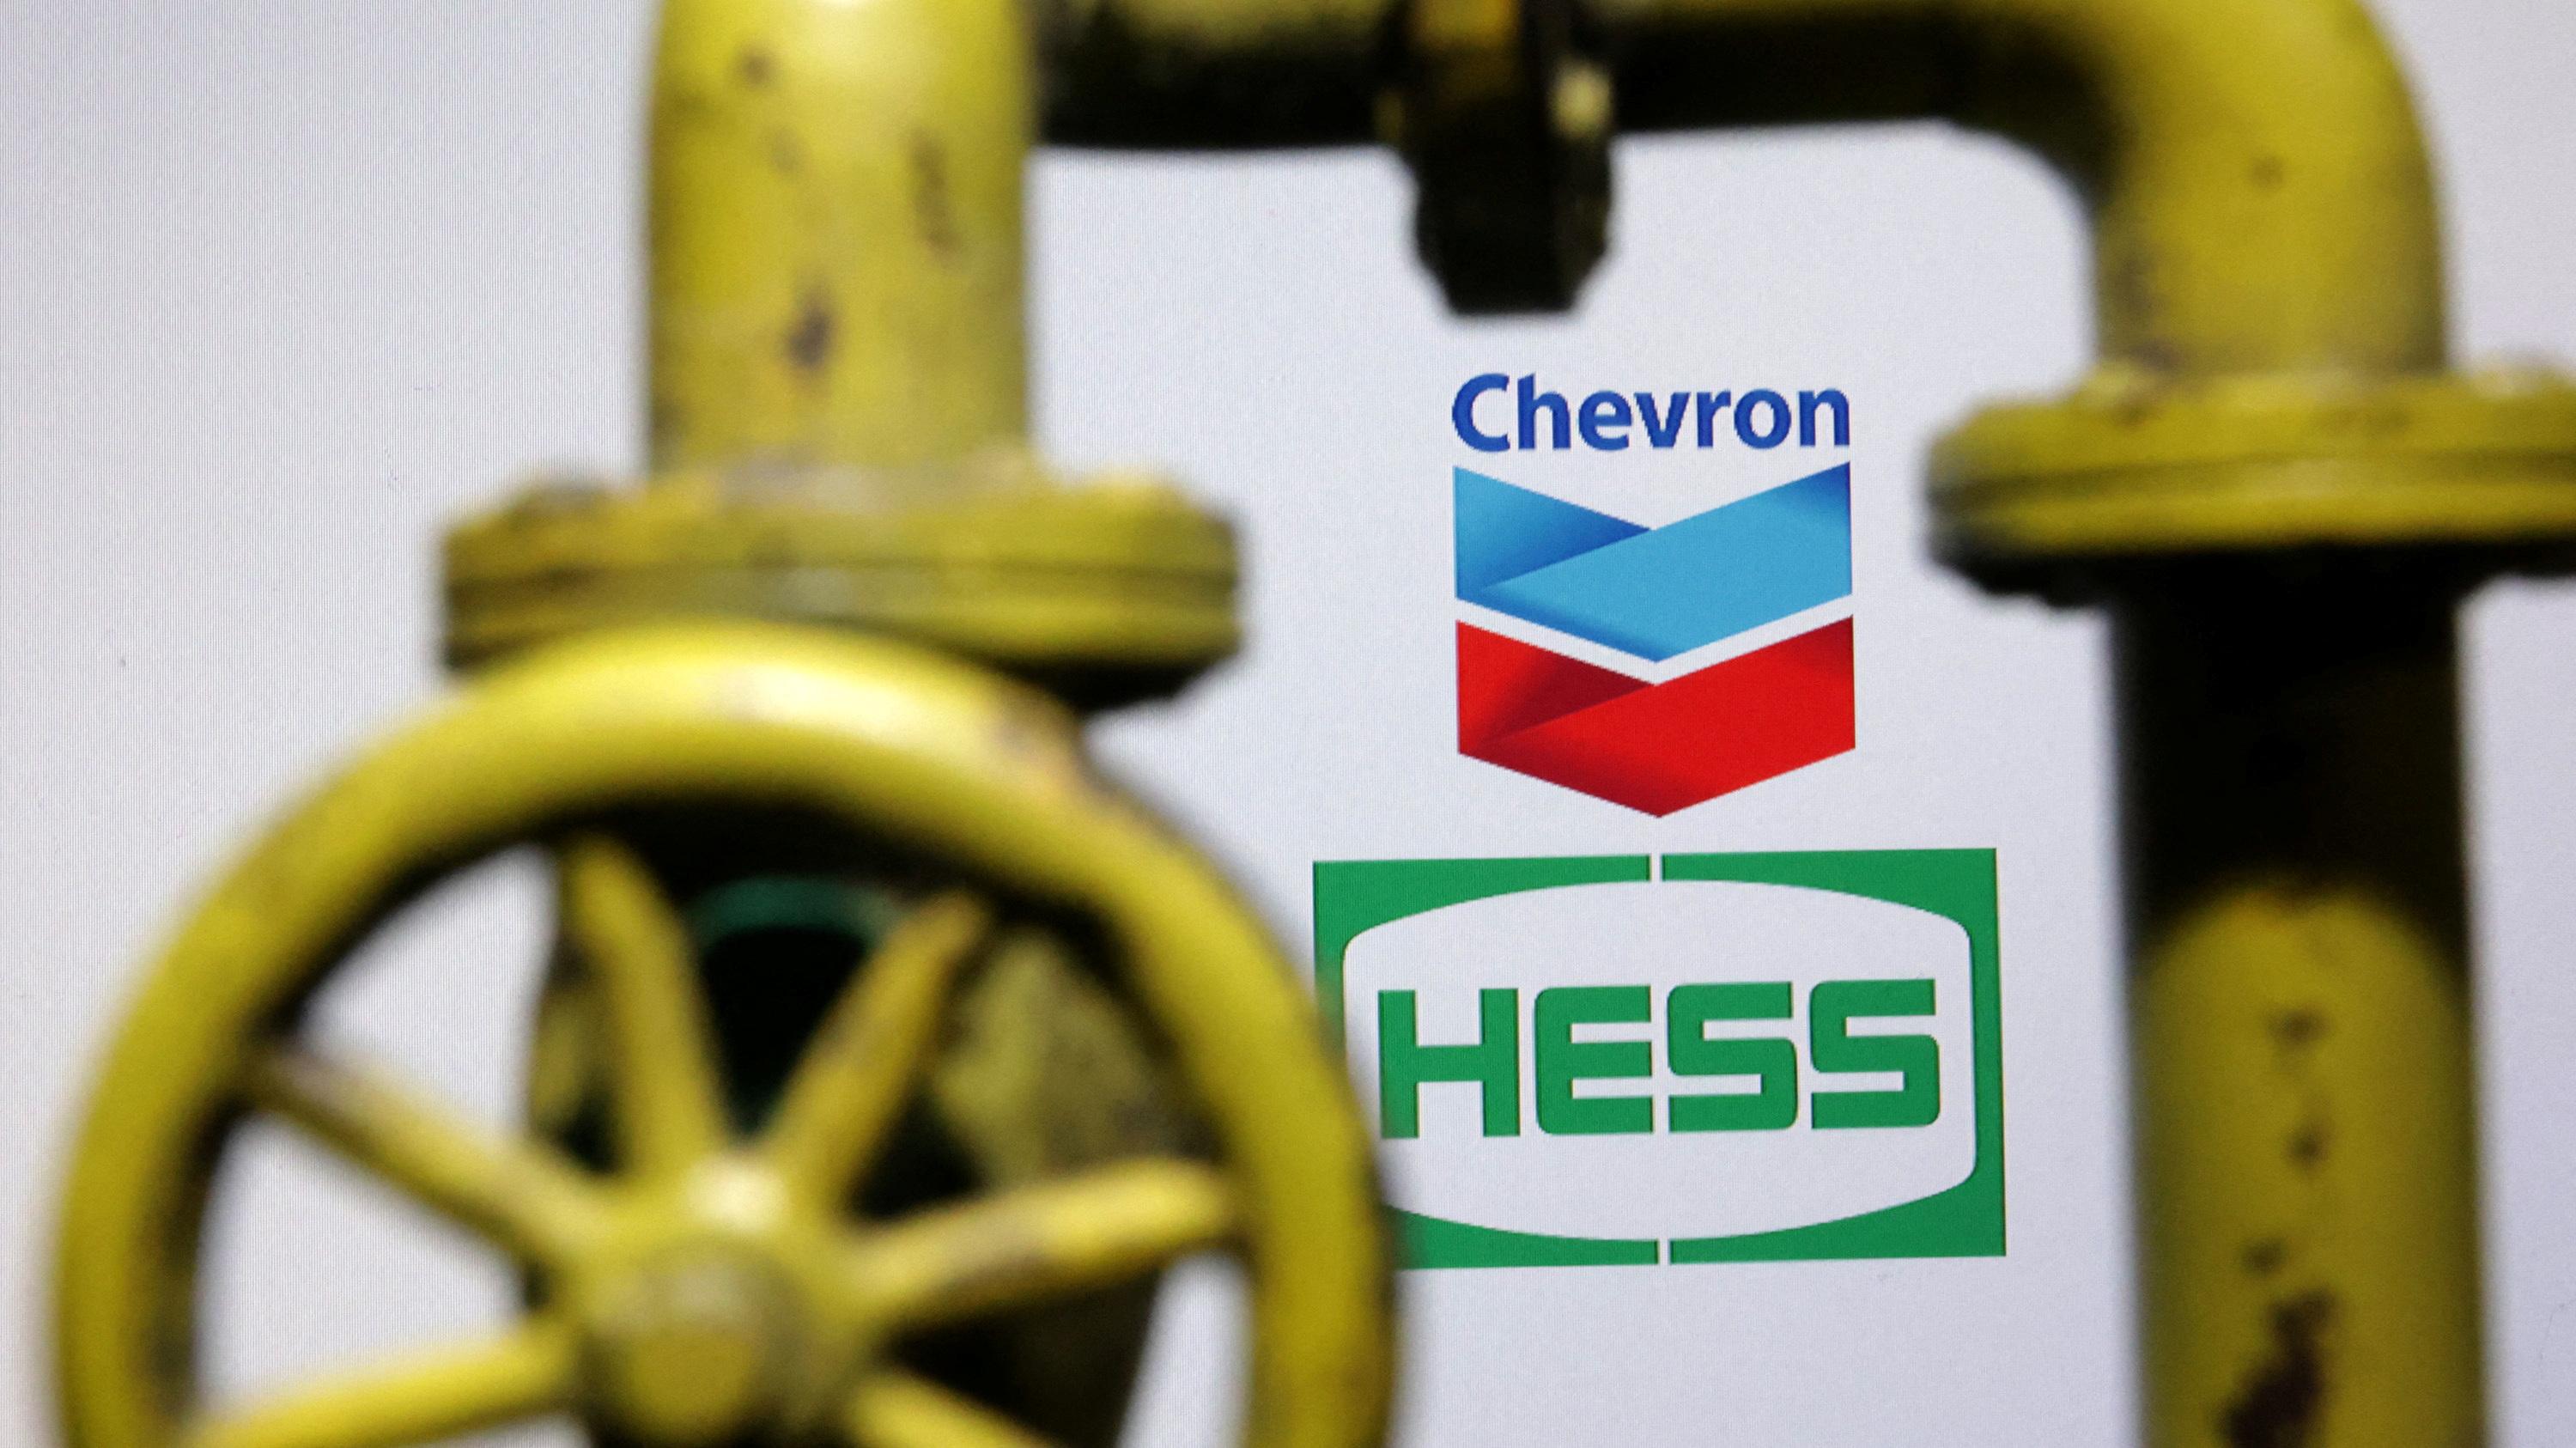 Illustration shows Chevron and Hess logos